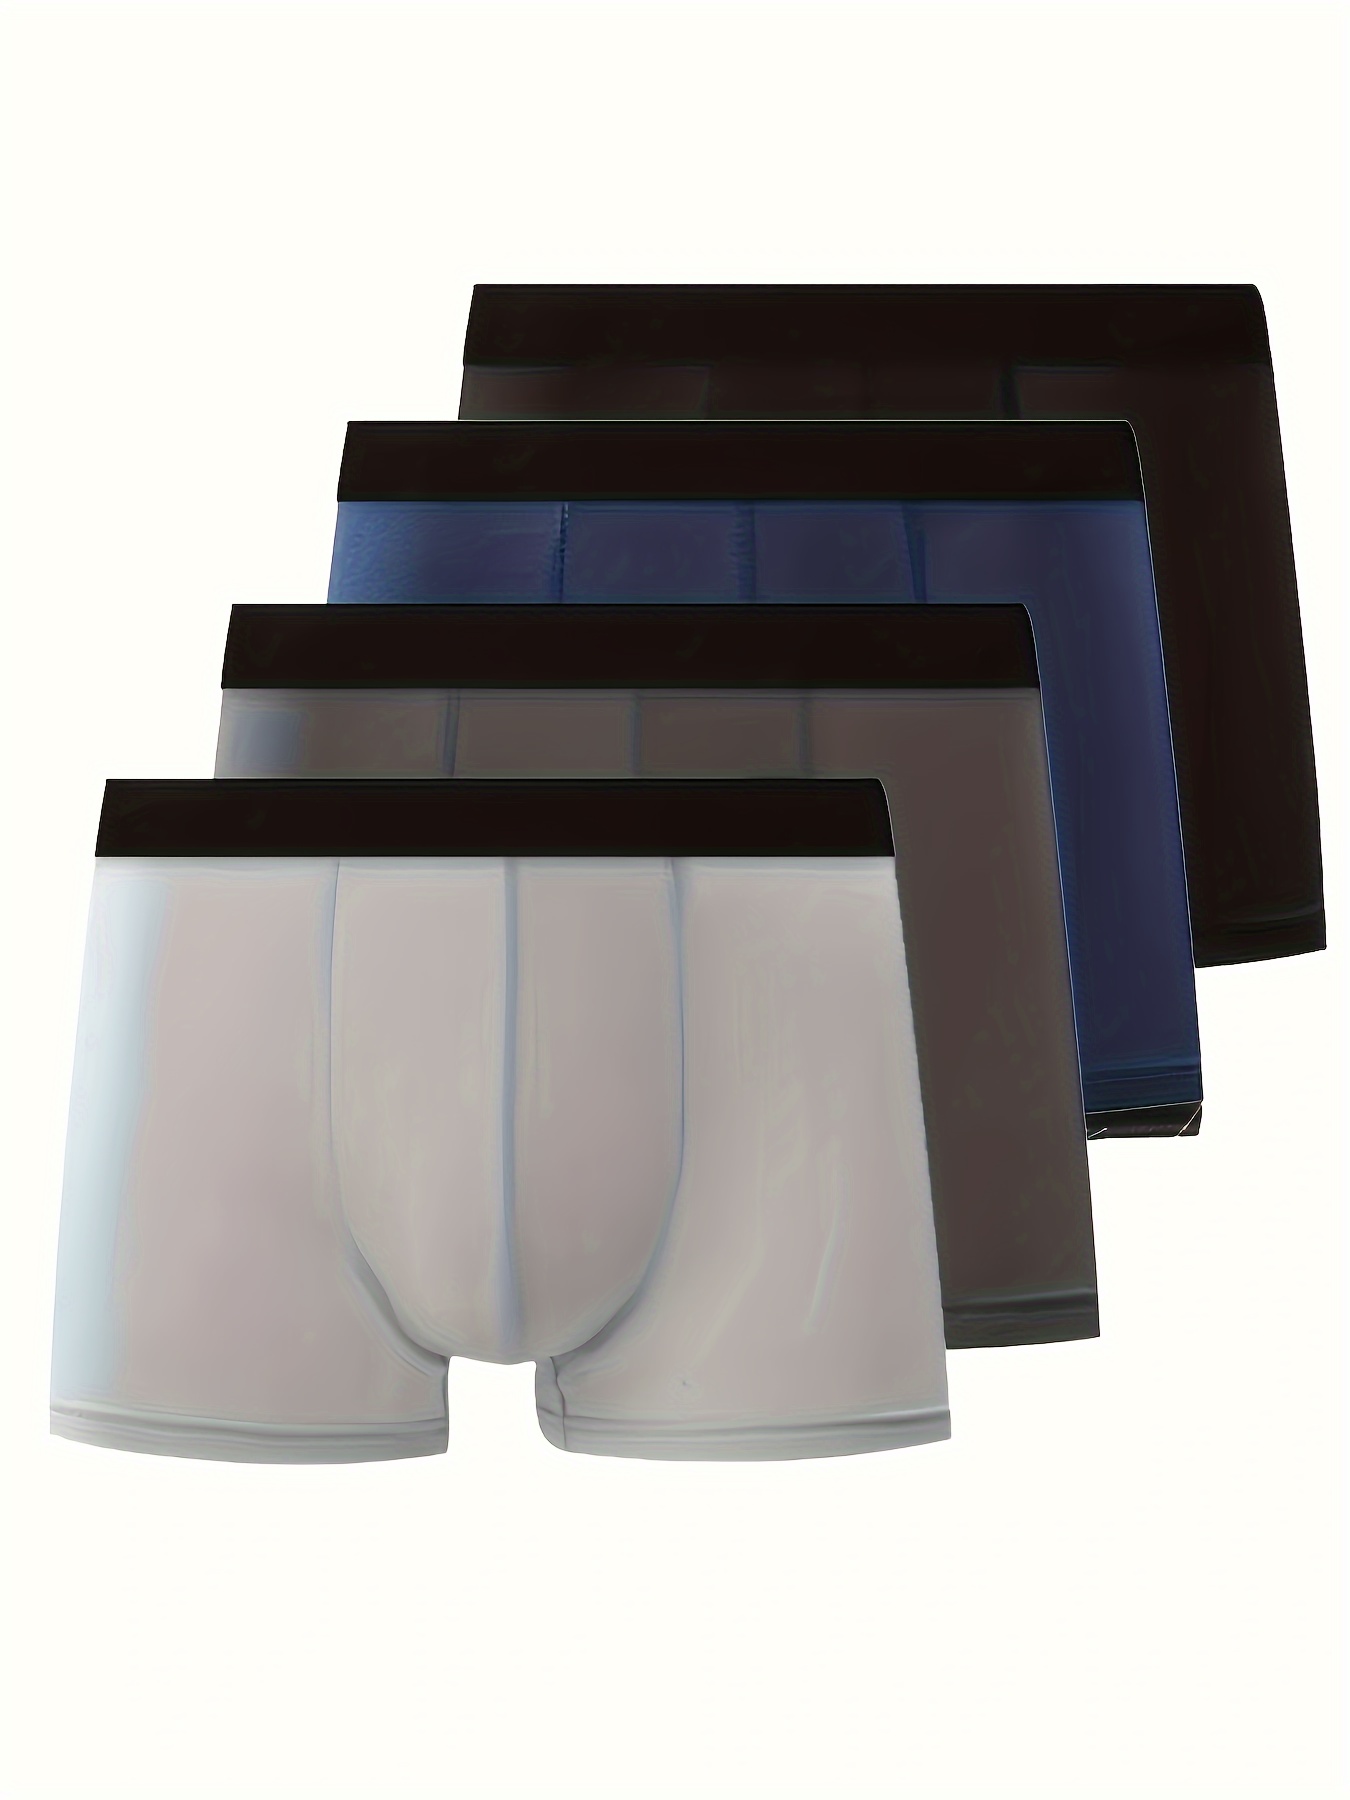 Quube -Sexy Men Elephant Underwear Pouch Briefs Thongs G string